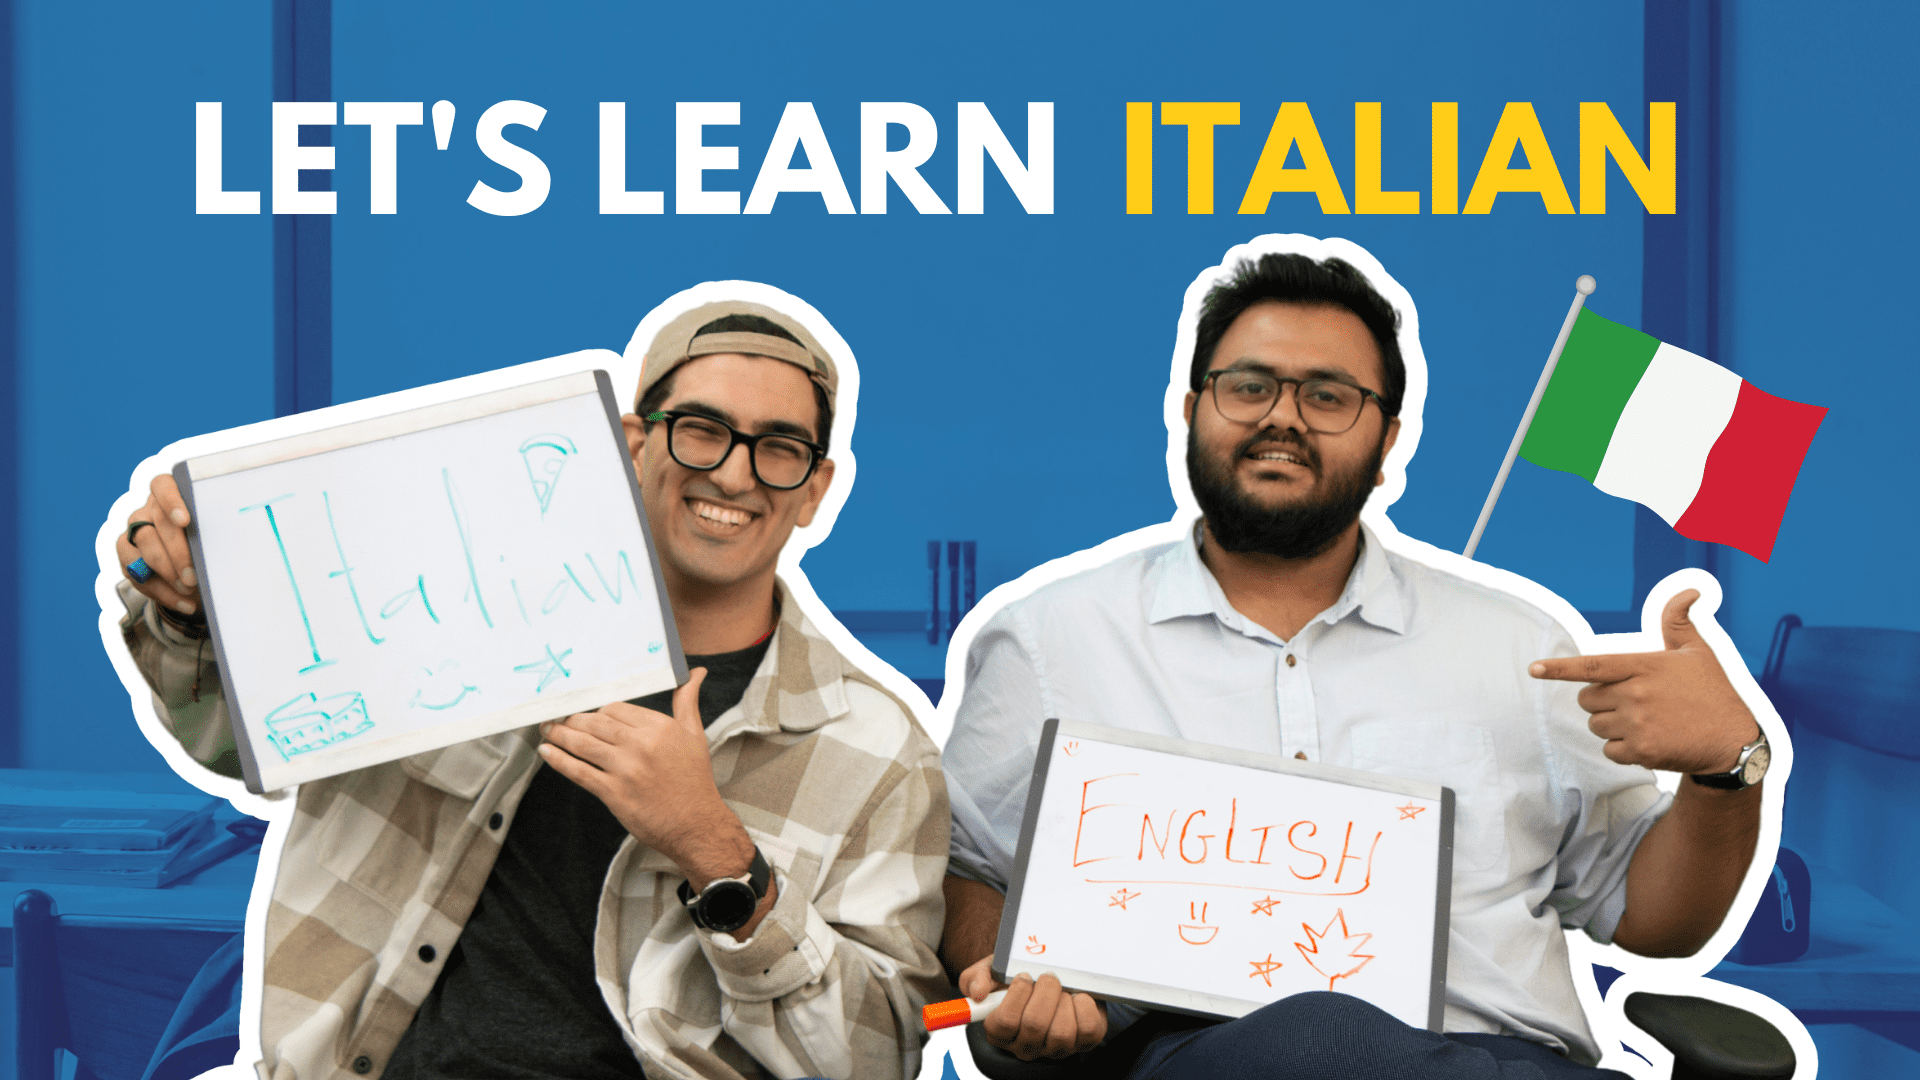 Student learning Italian